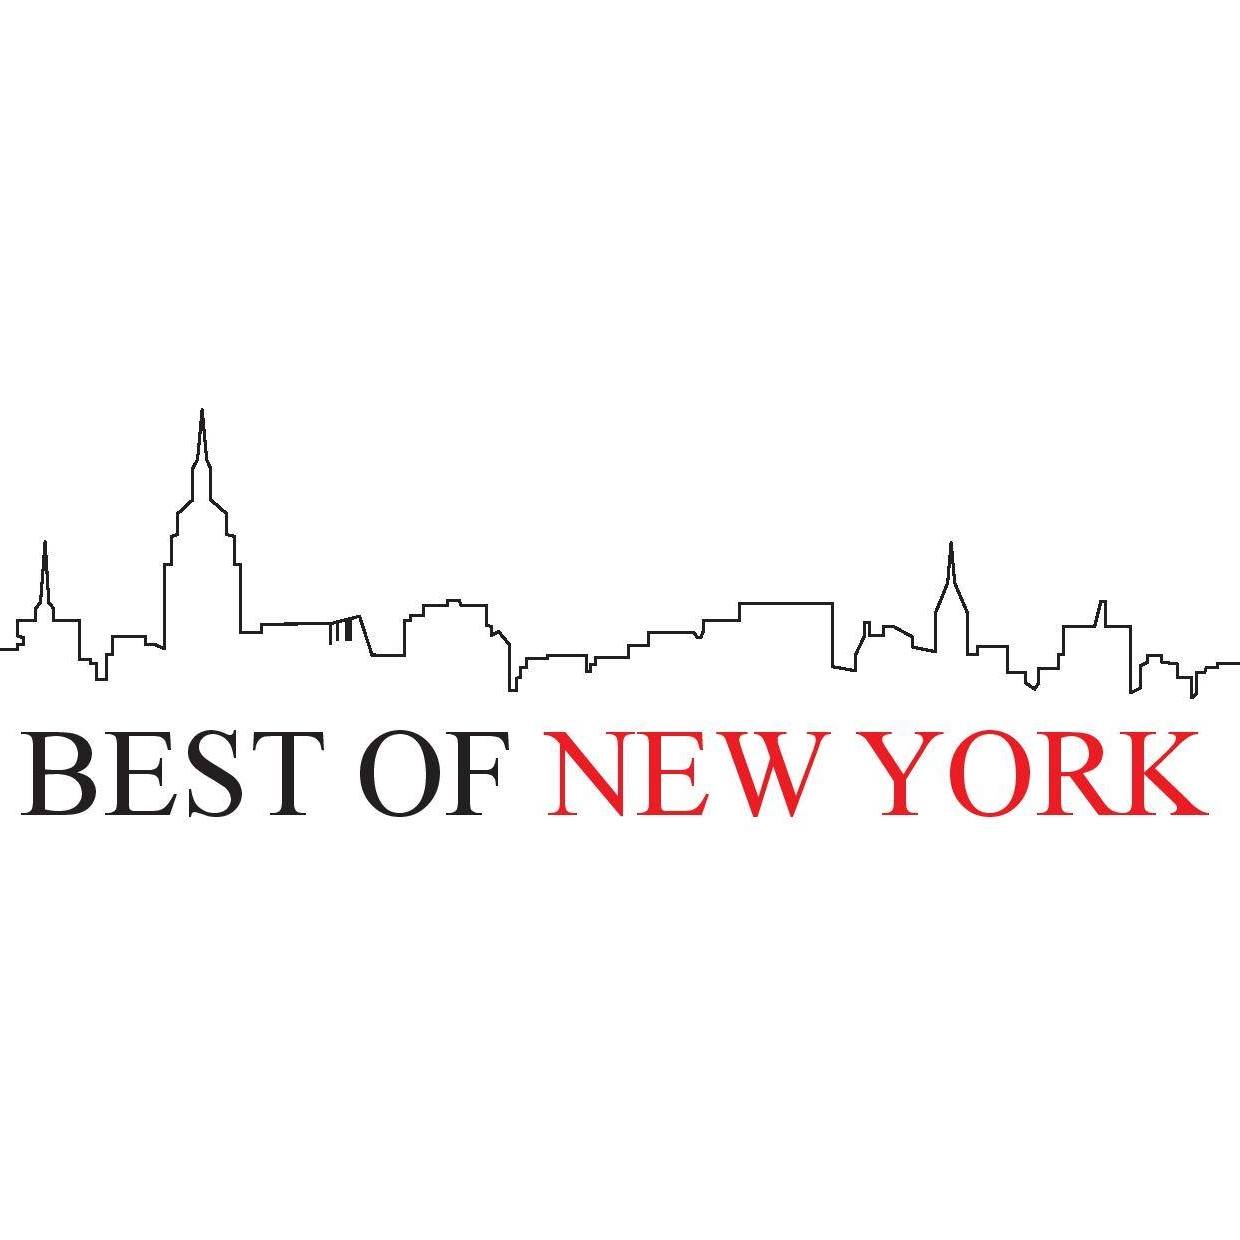 Best of NEW YORK